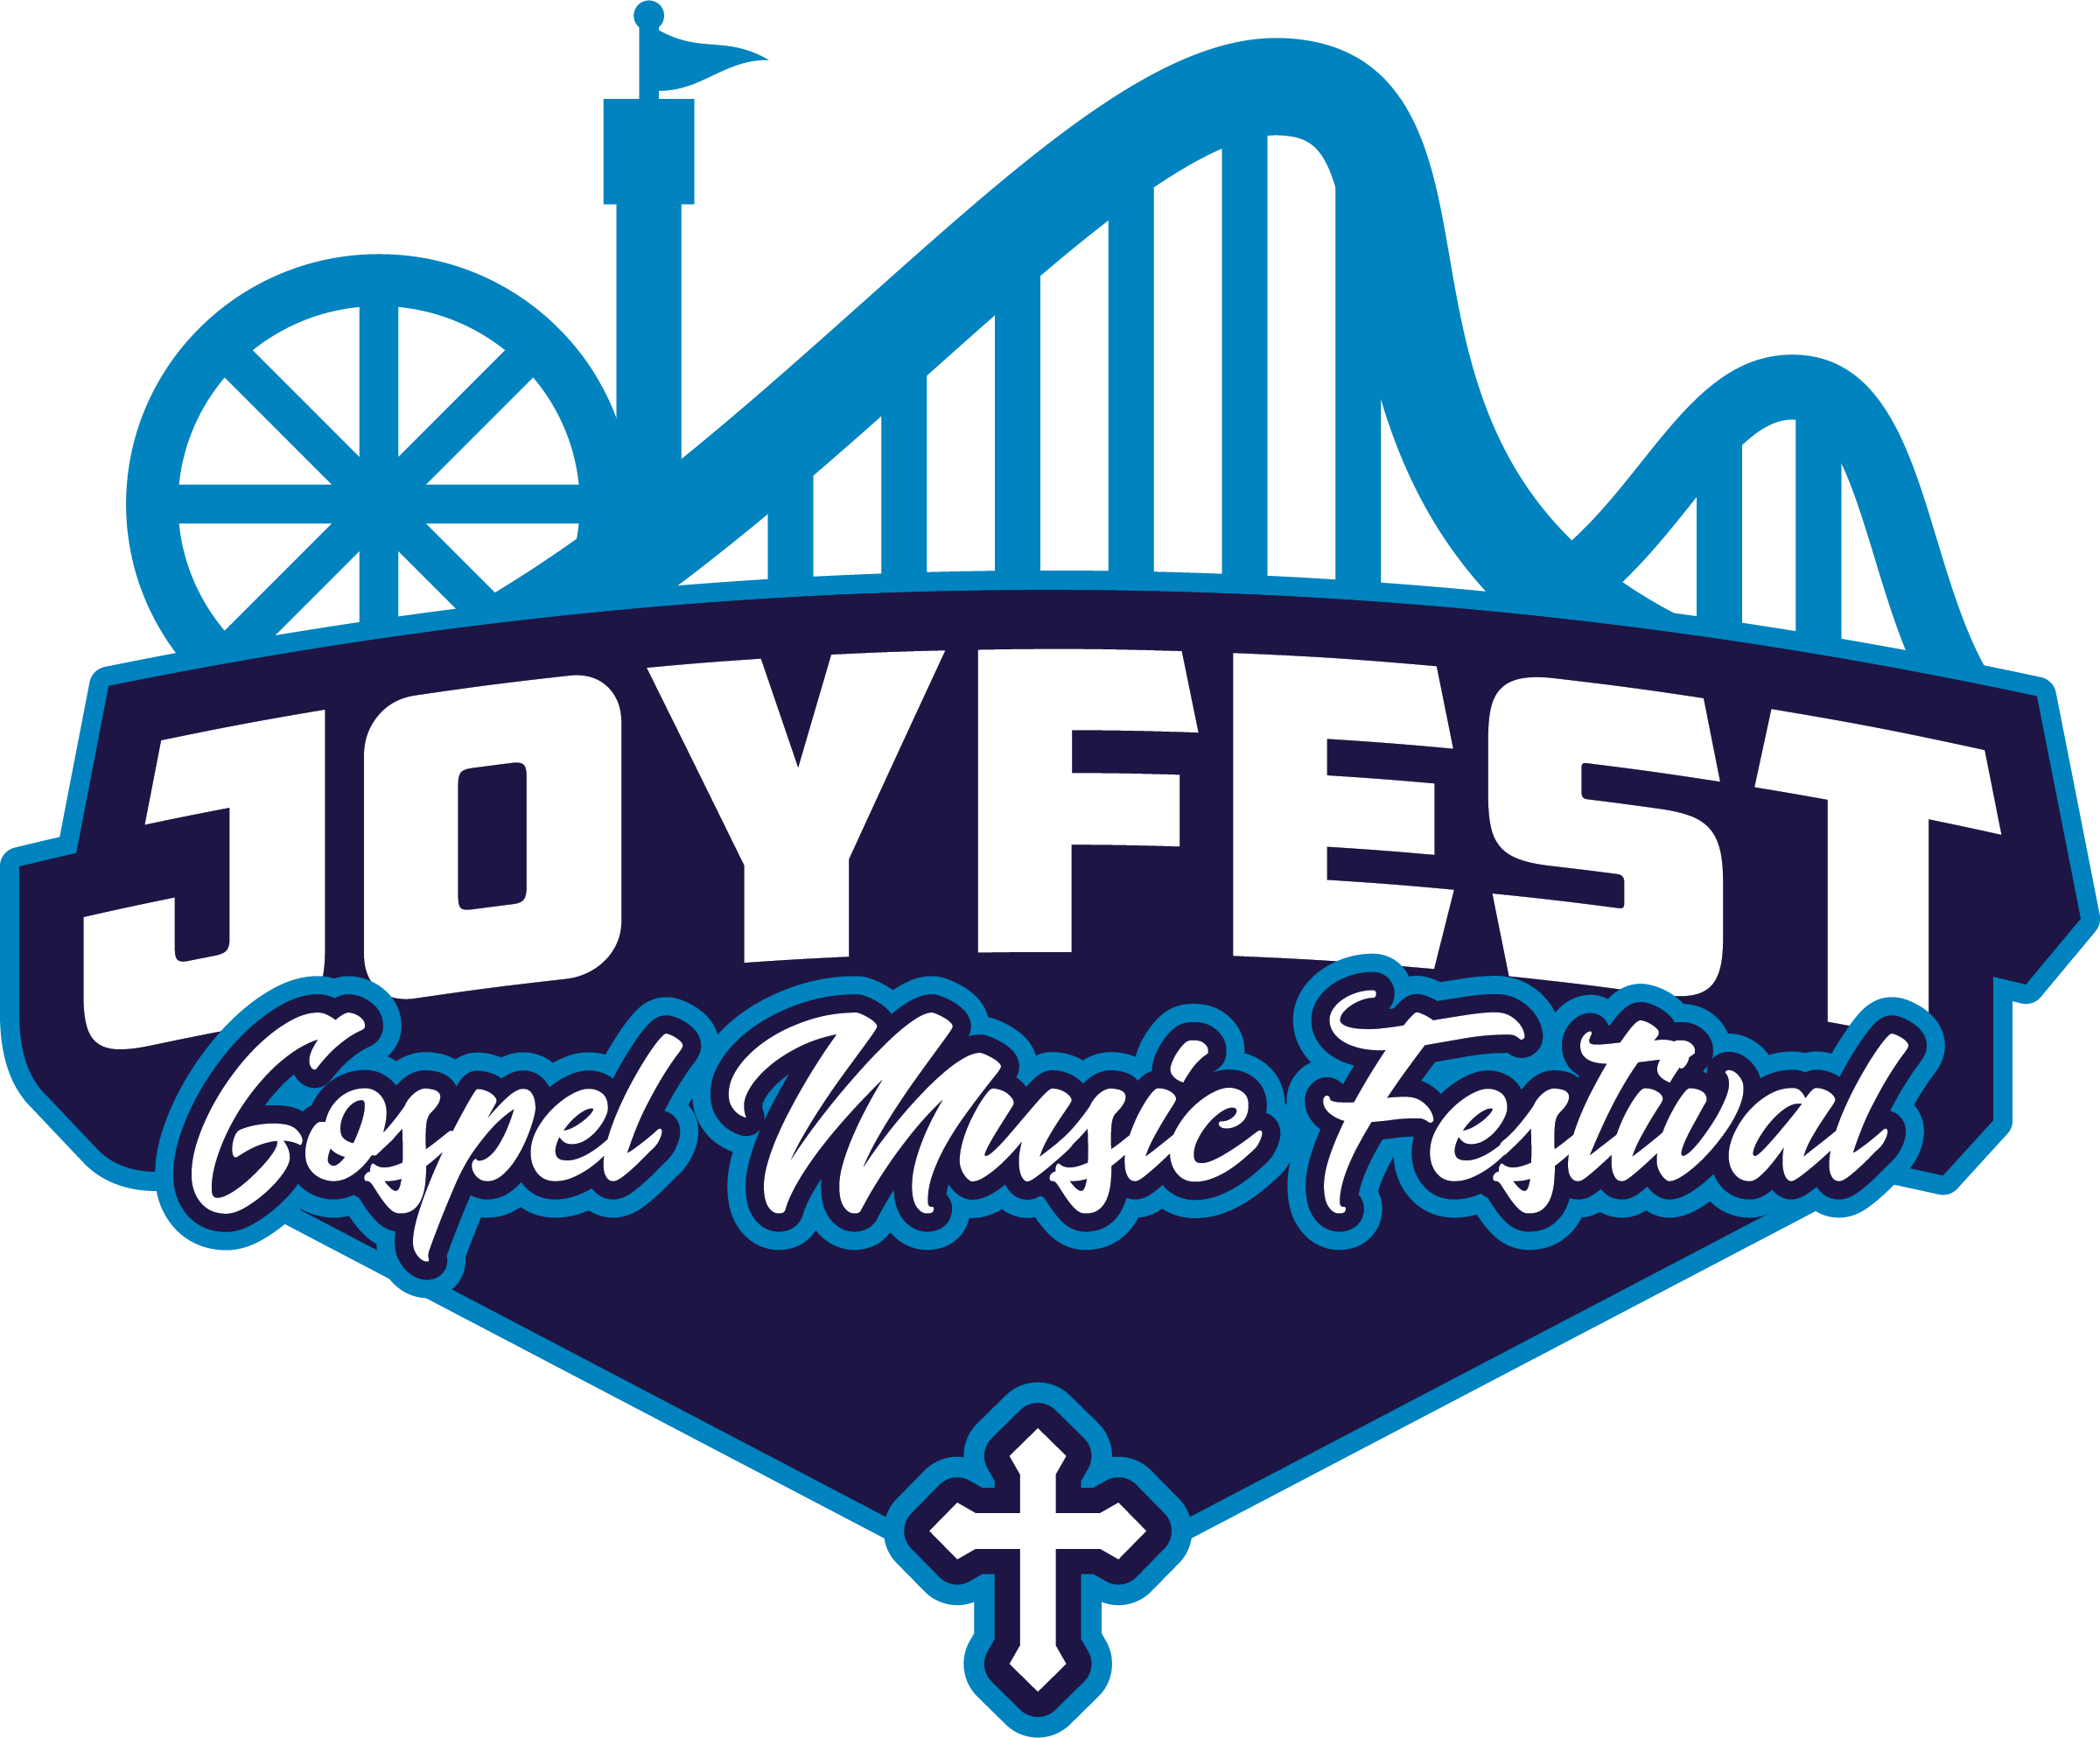 Carowinds Logo - JoyFest – Gospel Music Festival